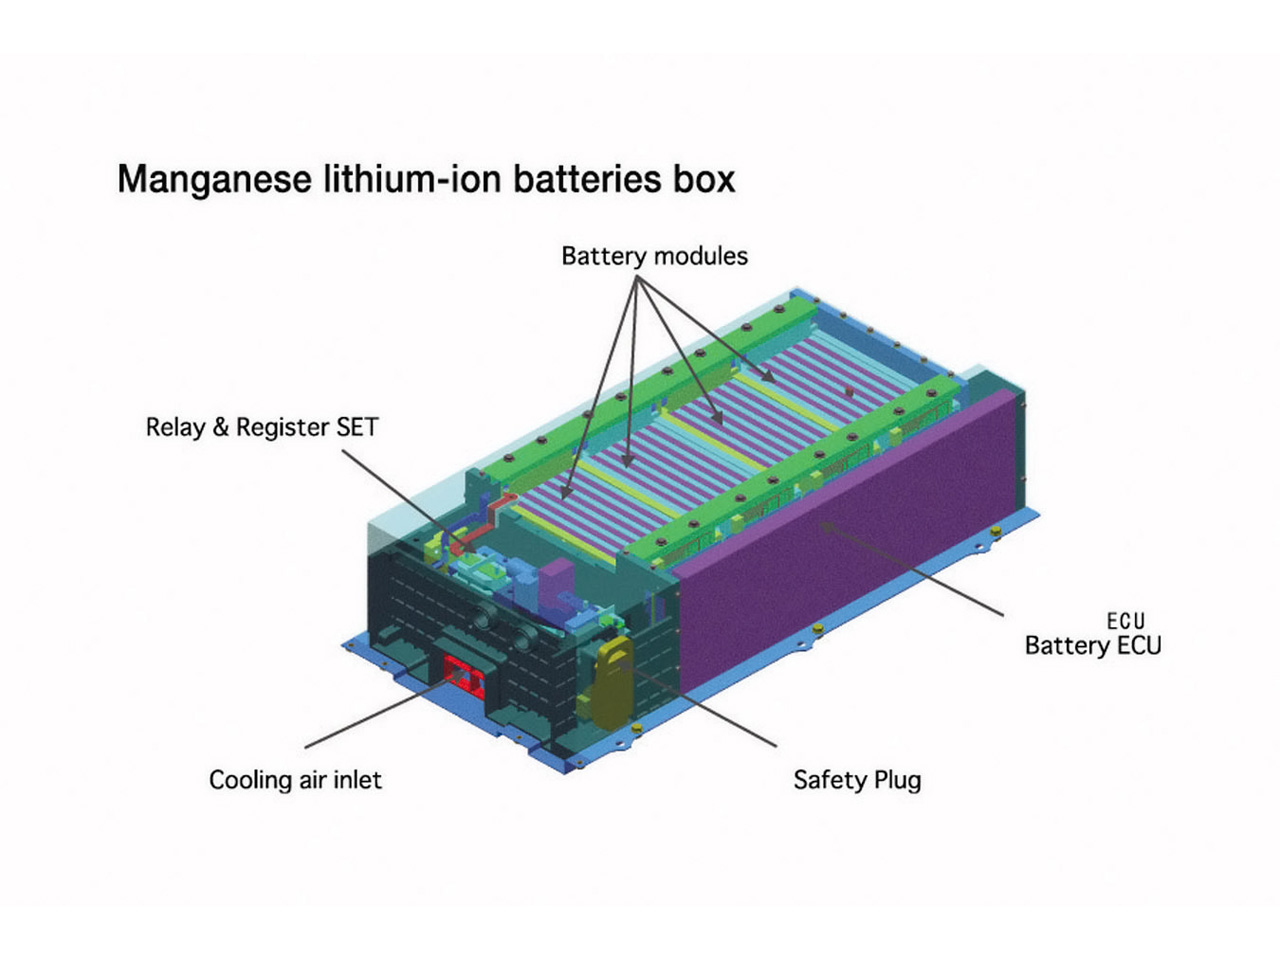 Ion batteries. Electric car Lithium ion Batteries. Battery Pack System литий-ионный АКБ. Lithium Battery Box для конструктора. Li-ion Polymer Battery Box.